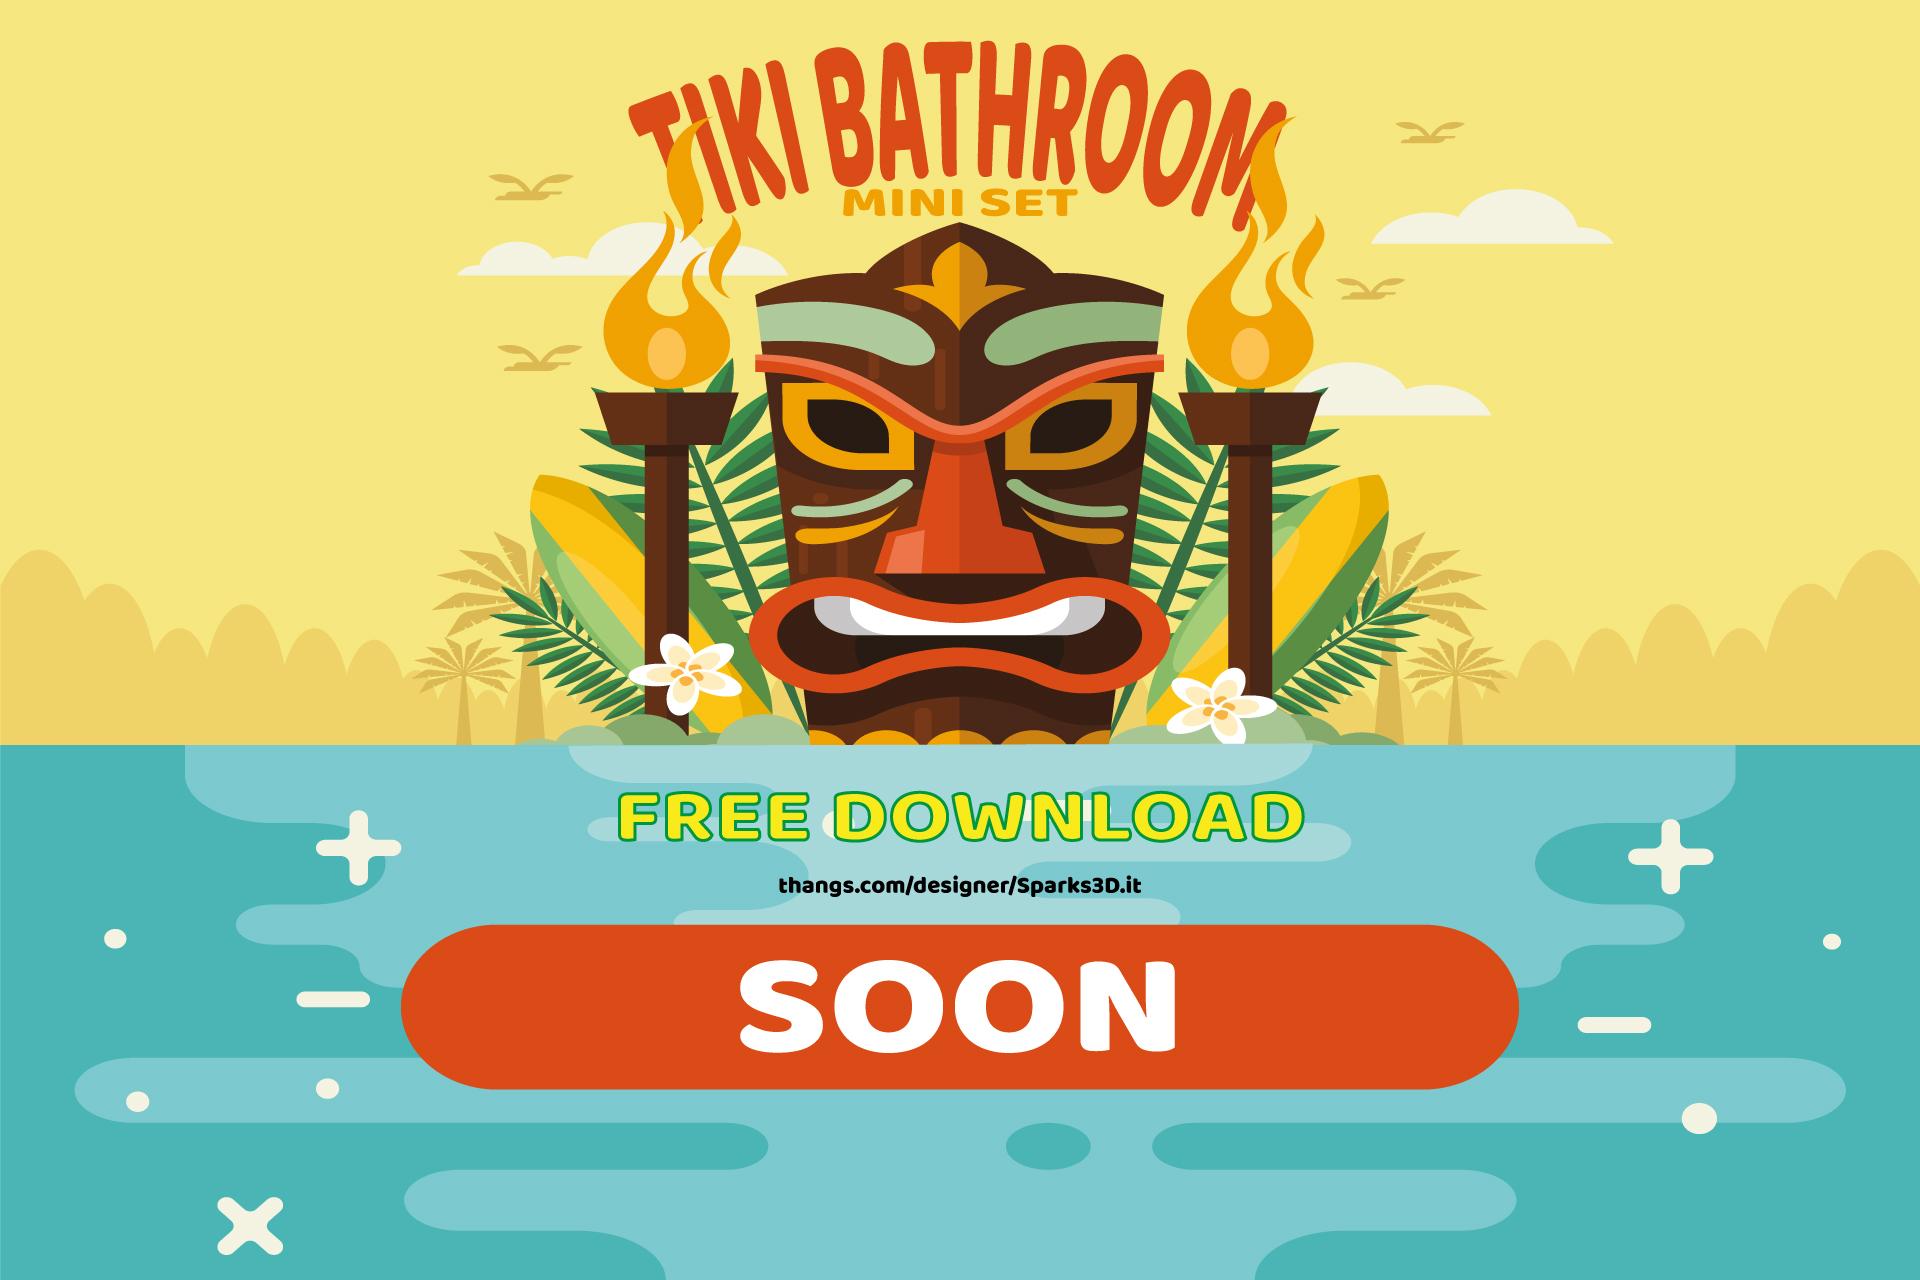 Tiki-Themed Bathroom Mini Set Coming Soon!